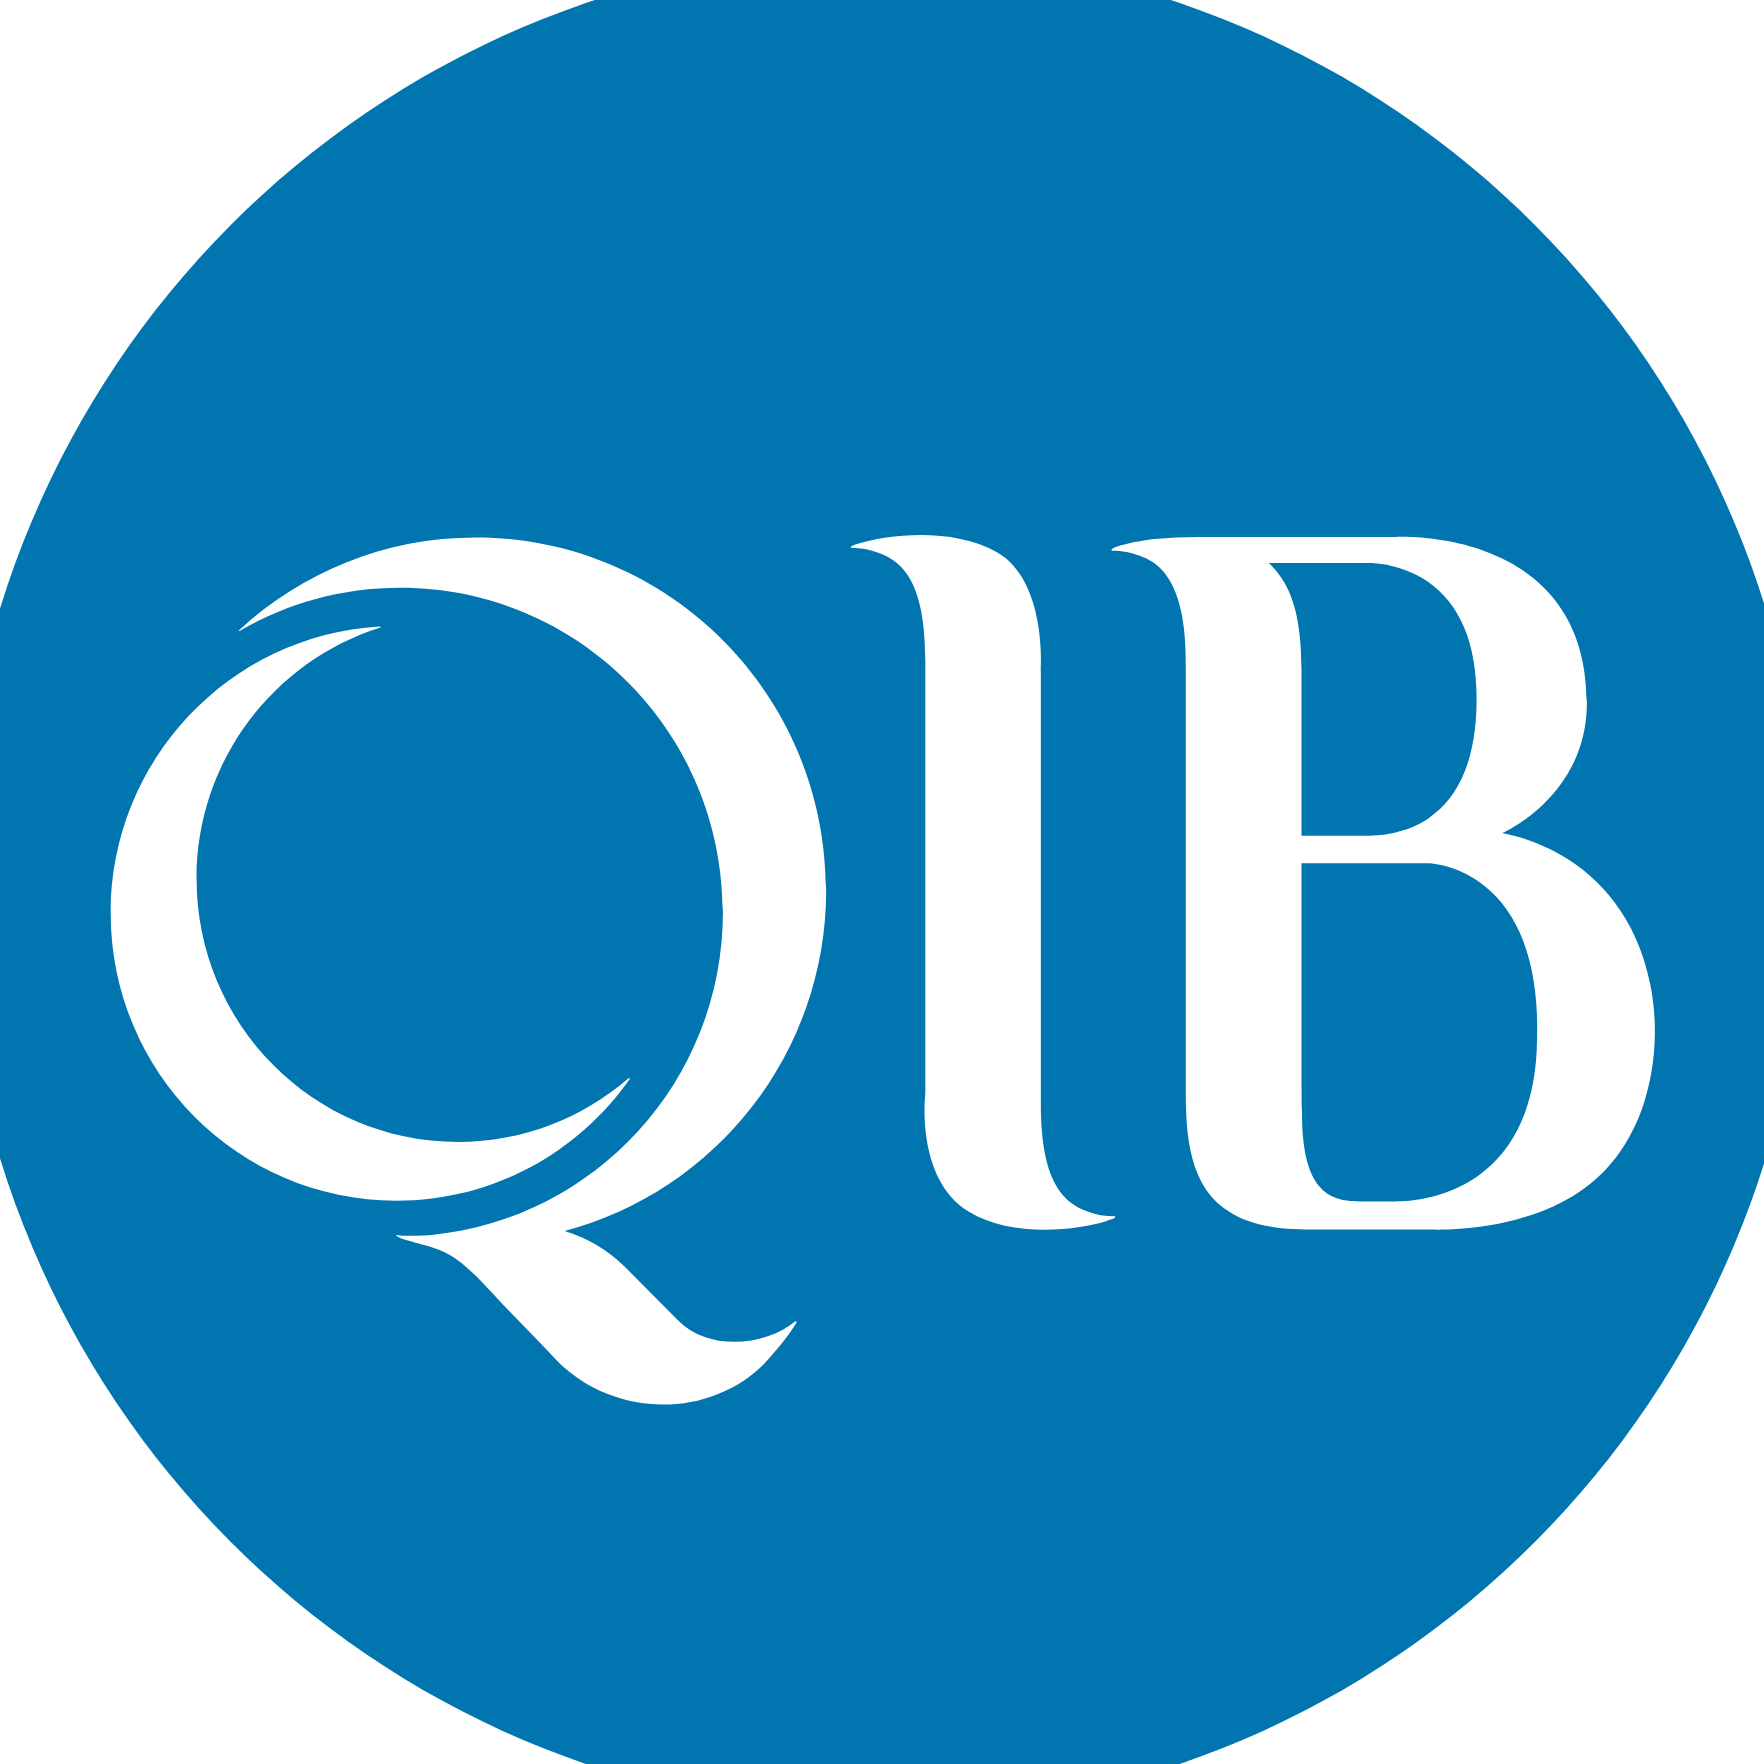 QIB Group